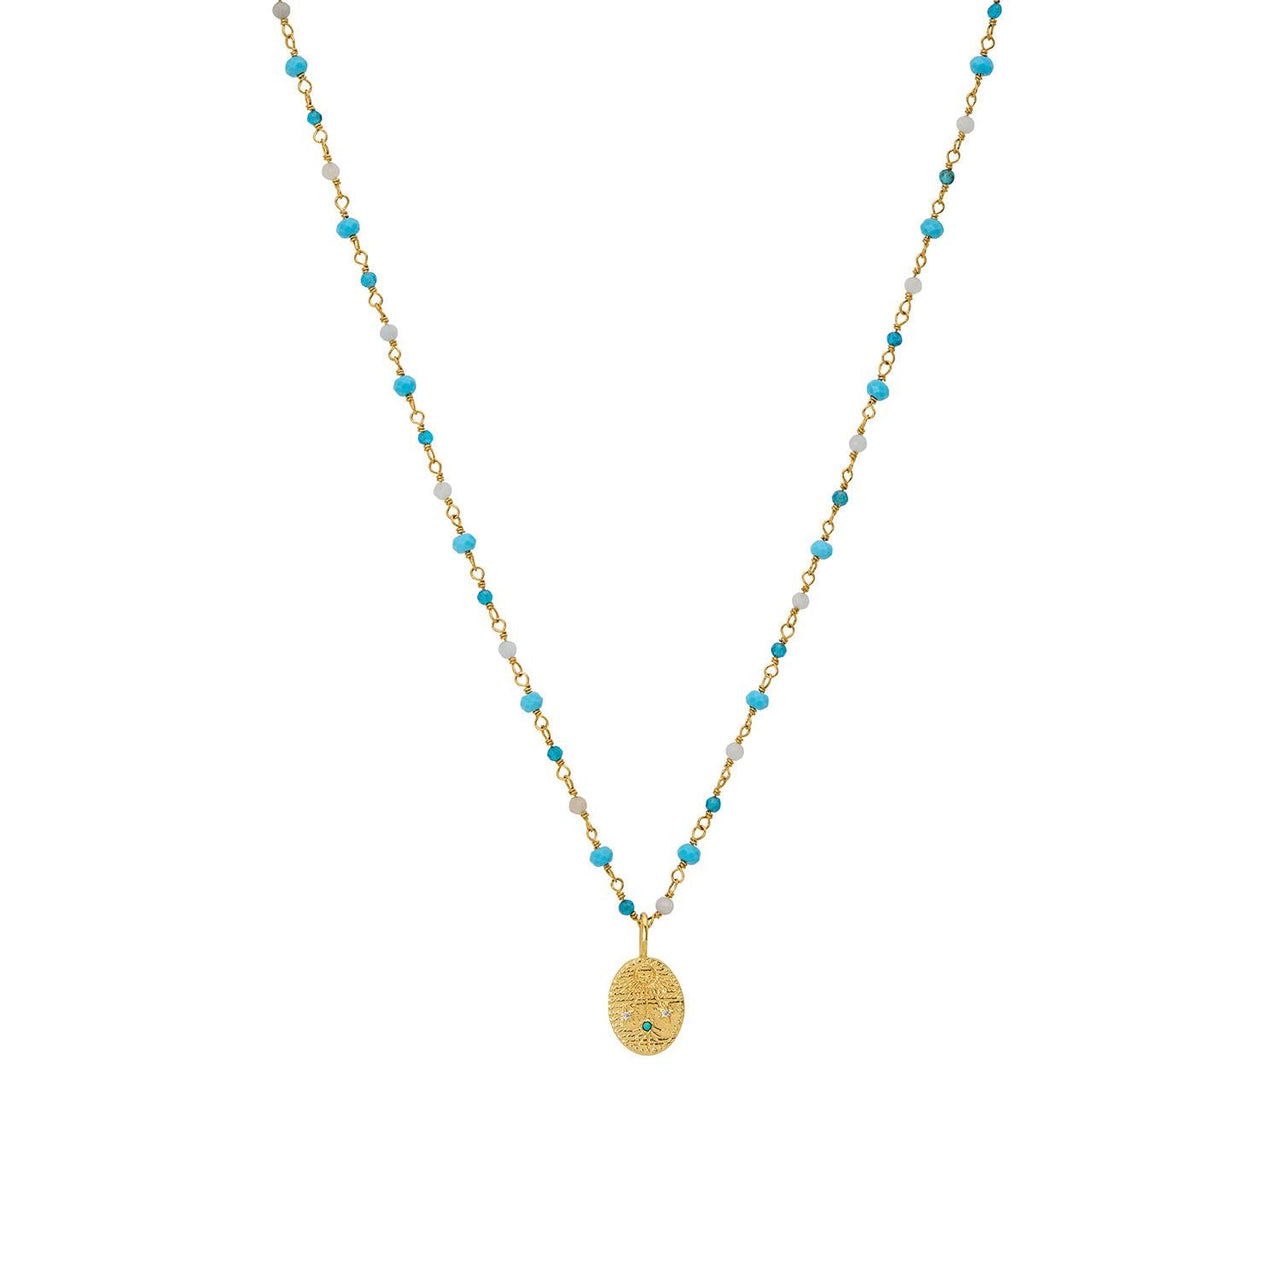 India Shaded Turquoise Long Necklace